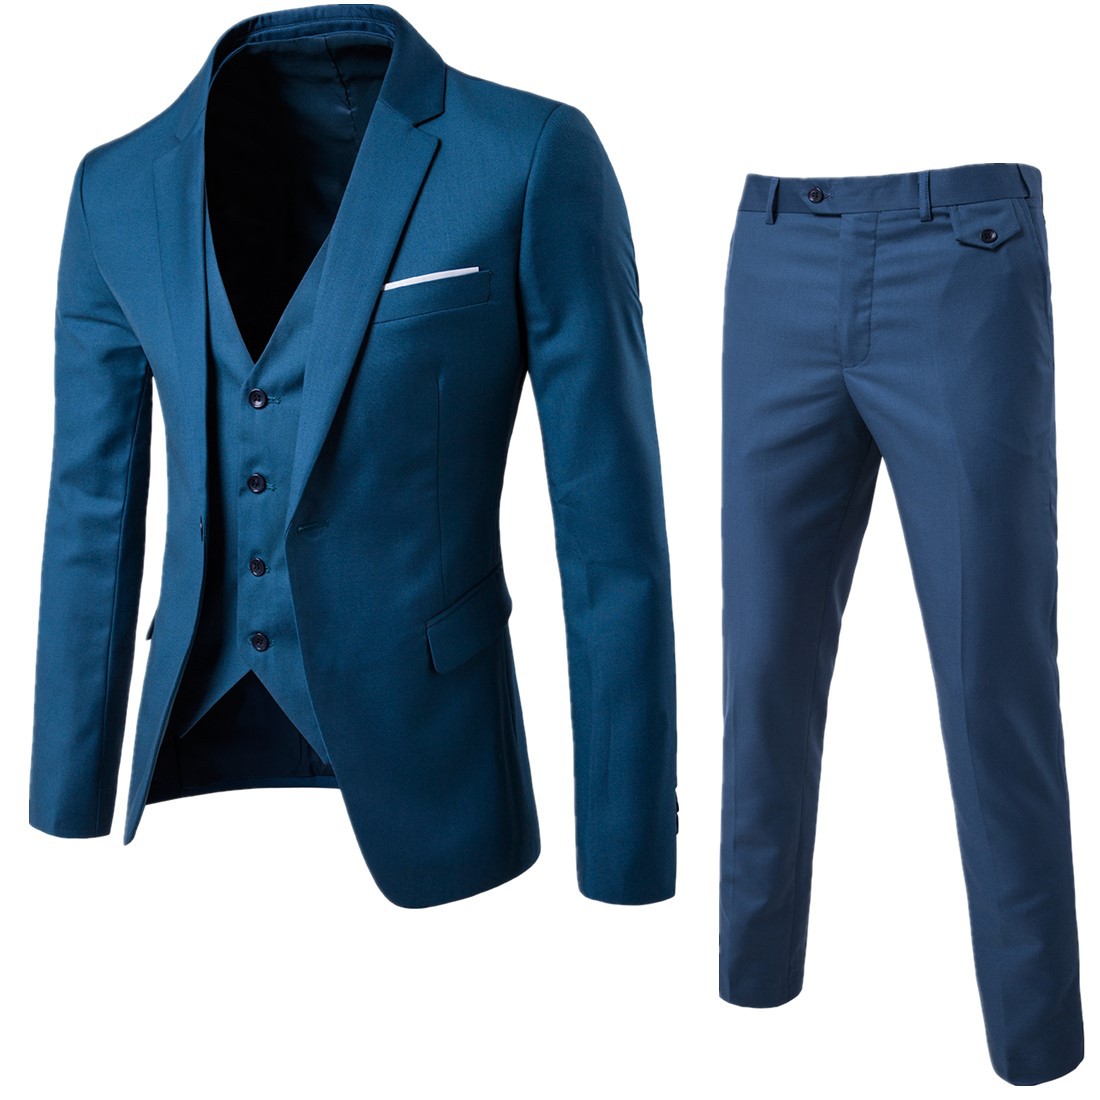 2020 new suit suit customized Korean slim coat men's three piece bank professional suit